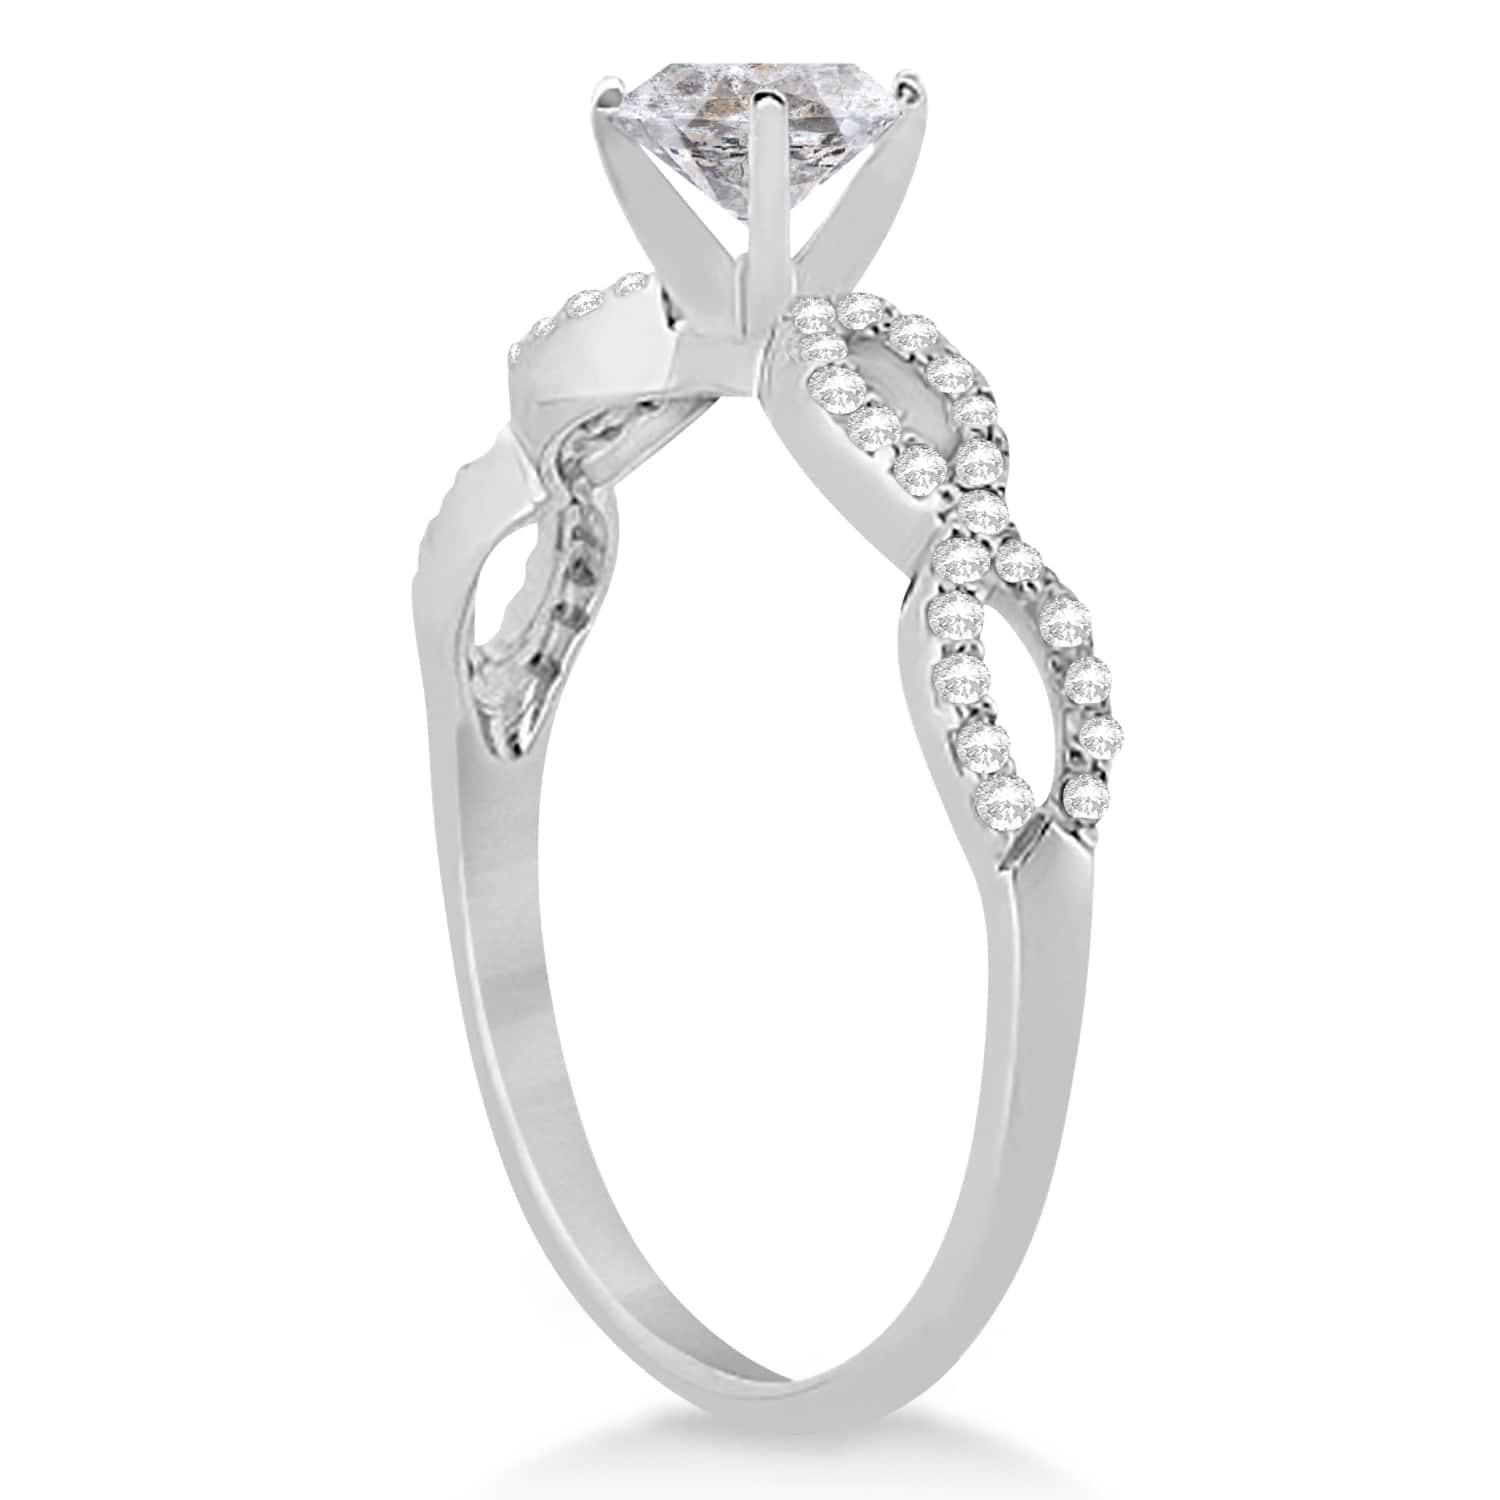 Twisted Infinity Round Salt & Pepper Diamond Bridal Ring Set 14k White Gold (0.63ct)